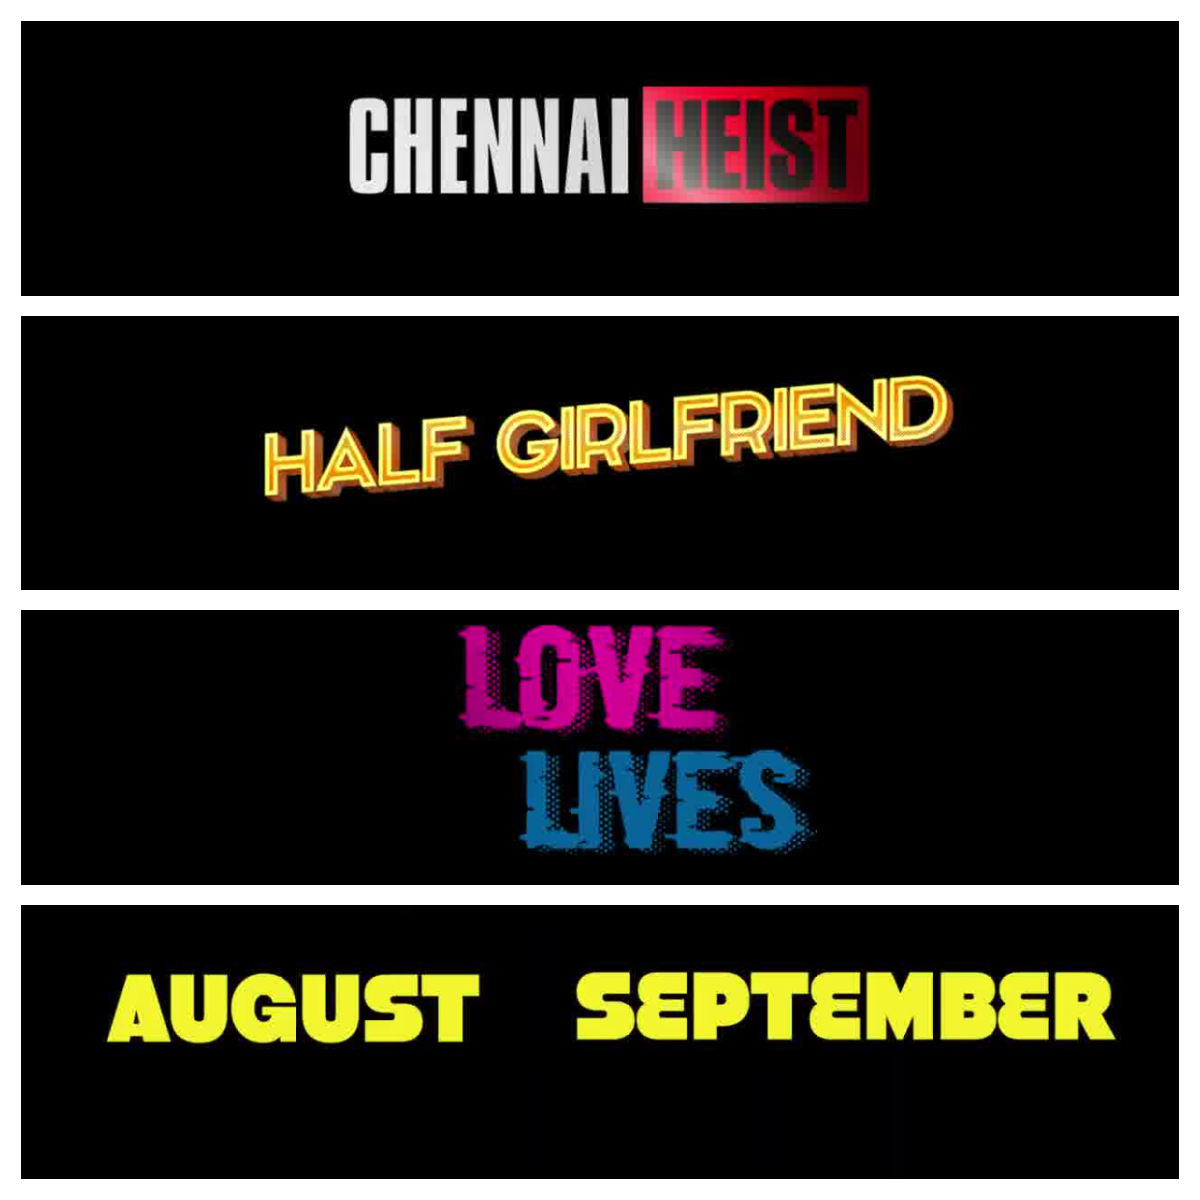 behindwoods web series Half Girlfriend Love Lives Chennai Heist